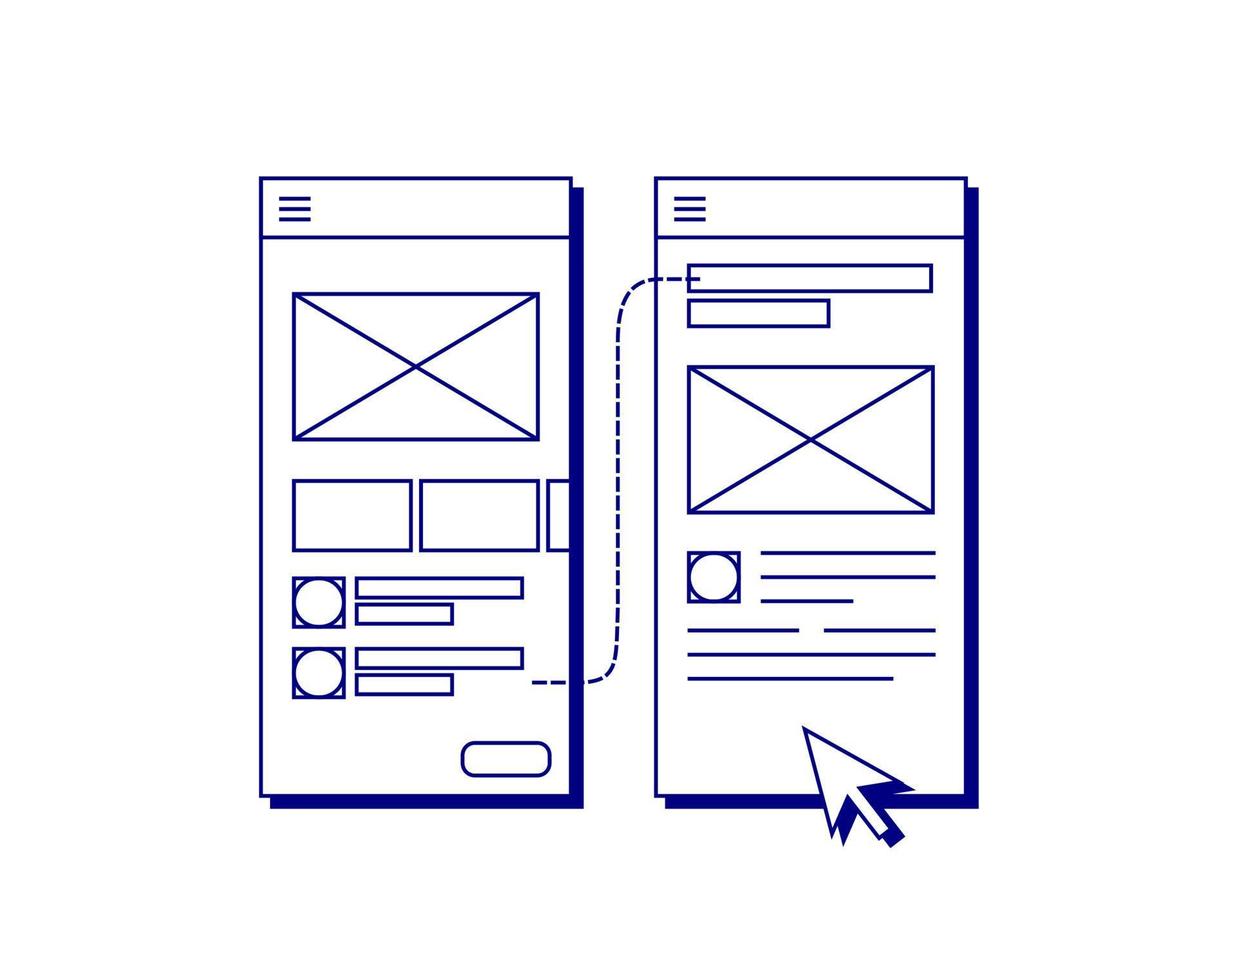 ilustración de vector de concepto de experiencia de usuario móvil de pantalla de estructura metálica para póster de diseñador de interfaz de usuario o elemento gráfico